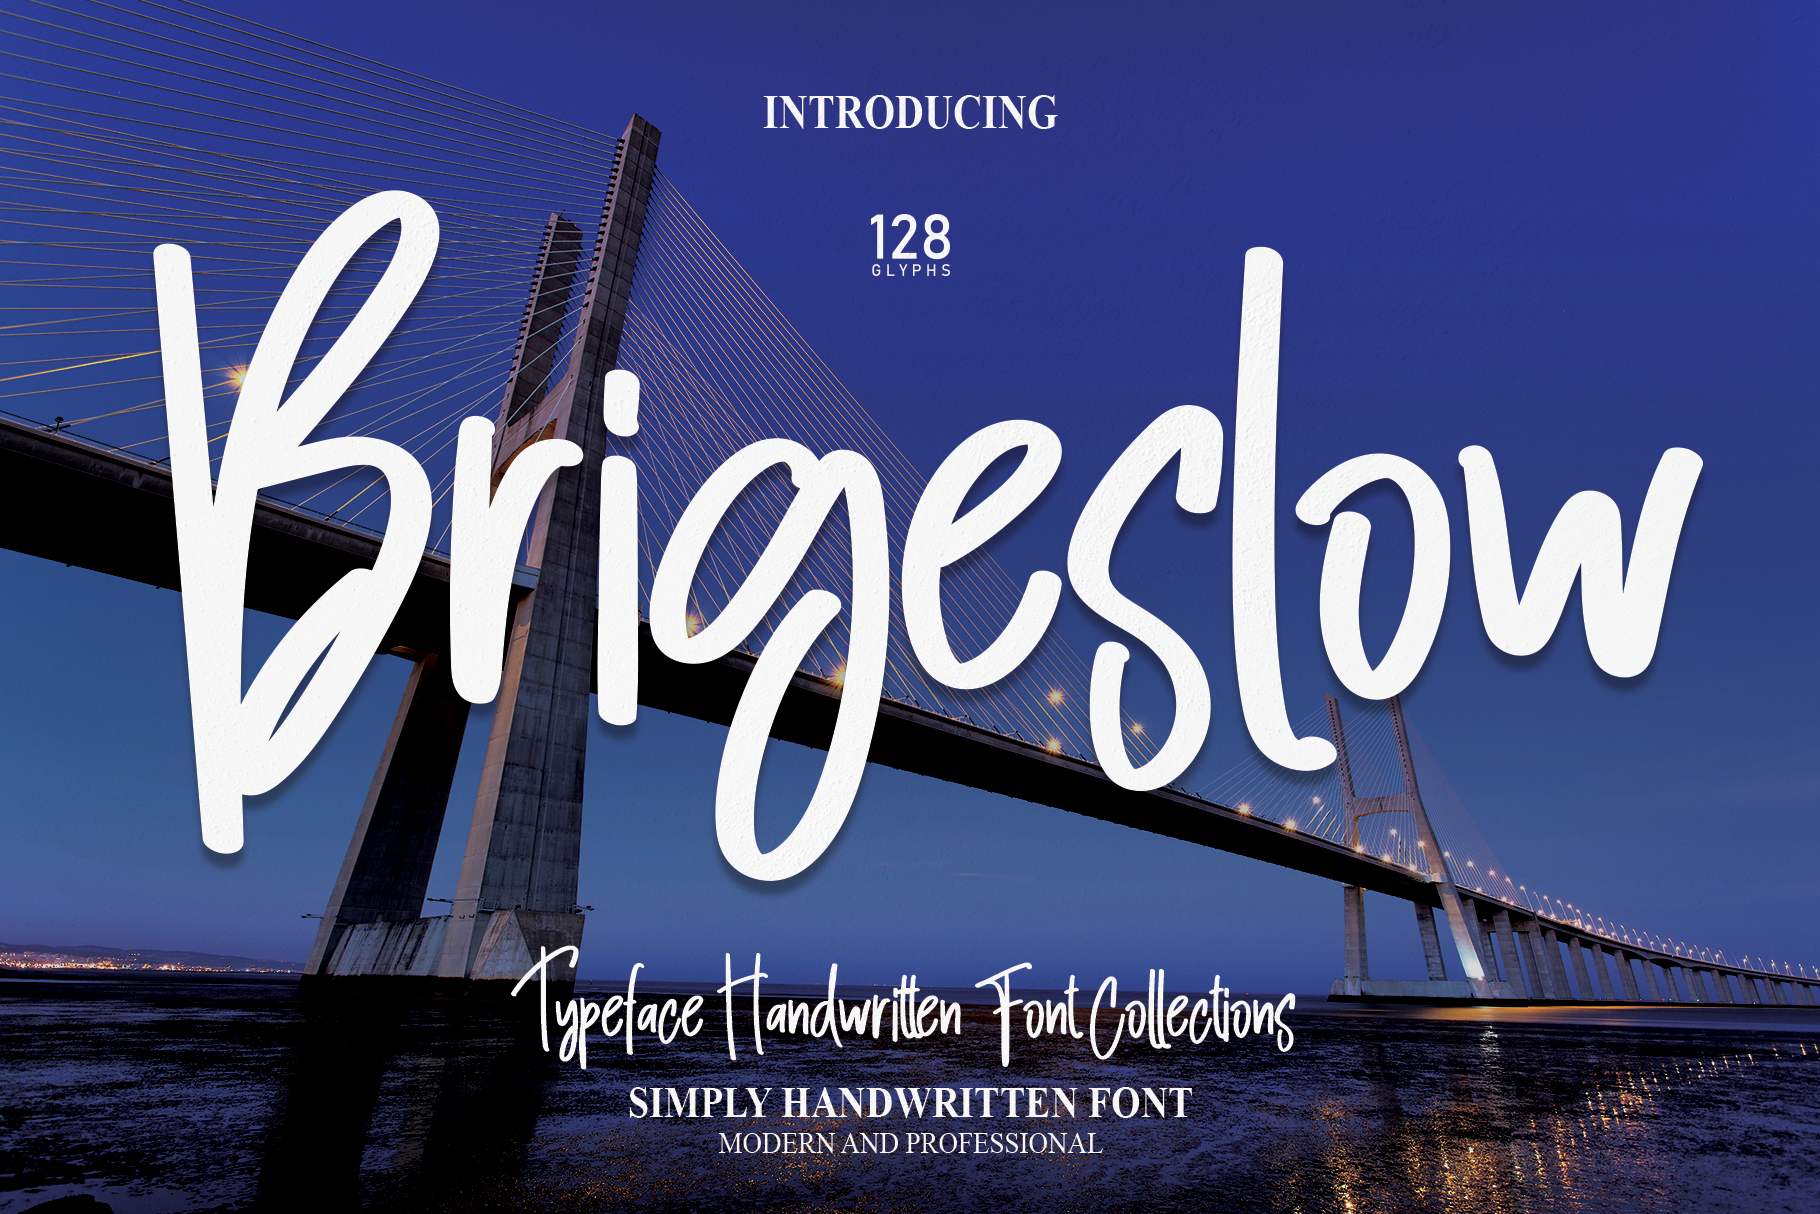 Brigeslow